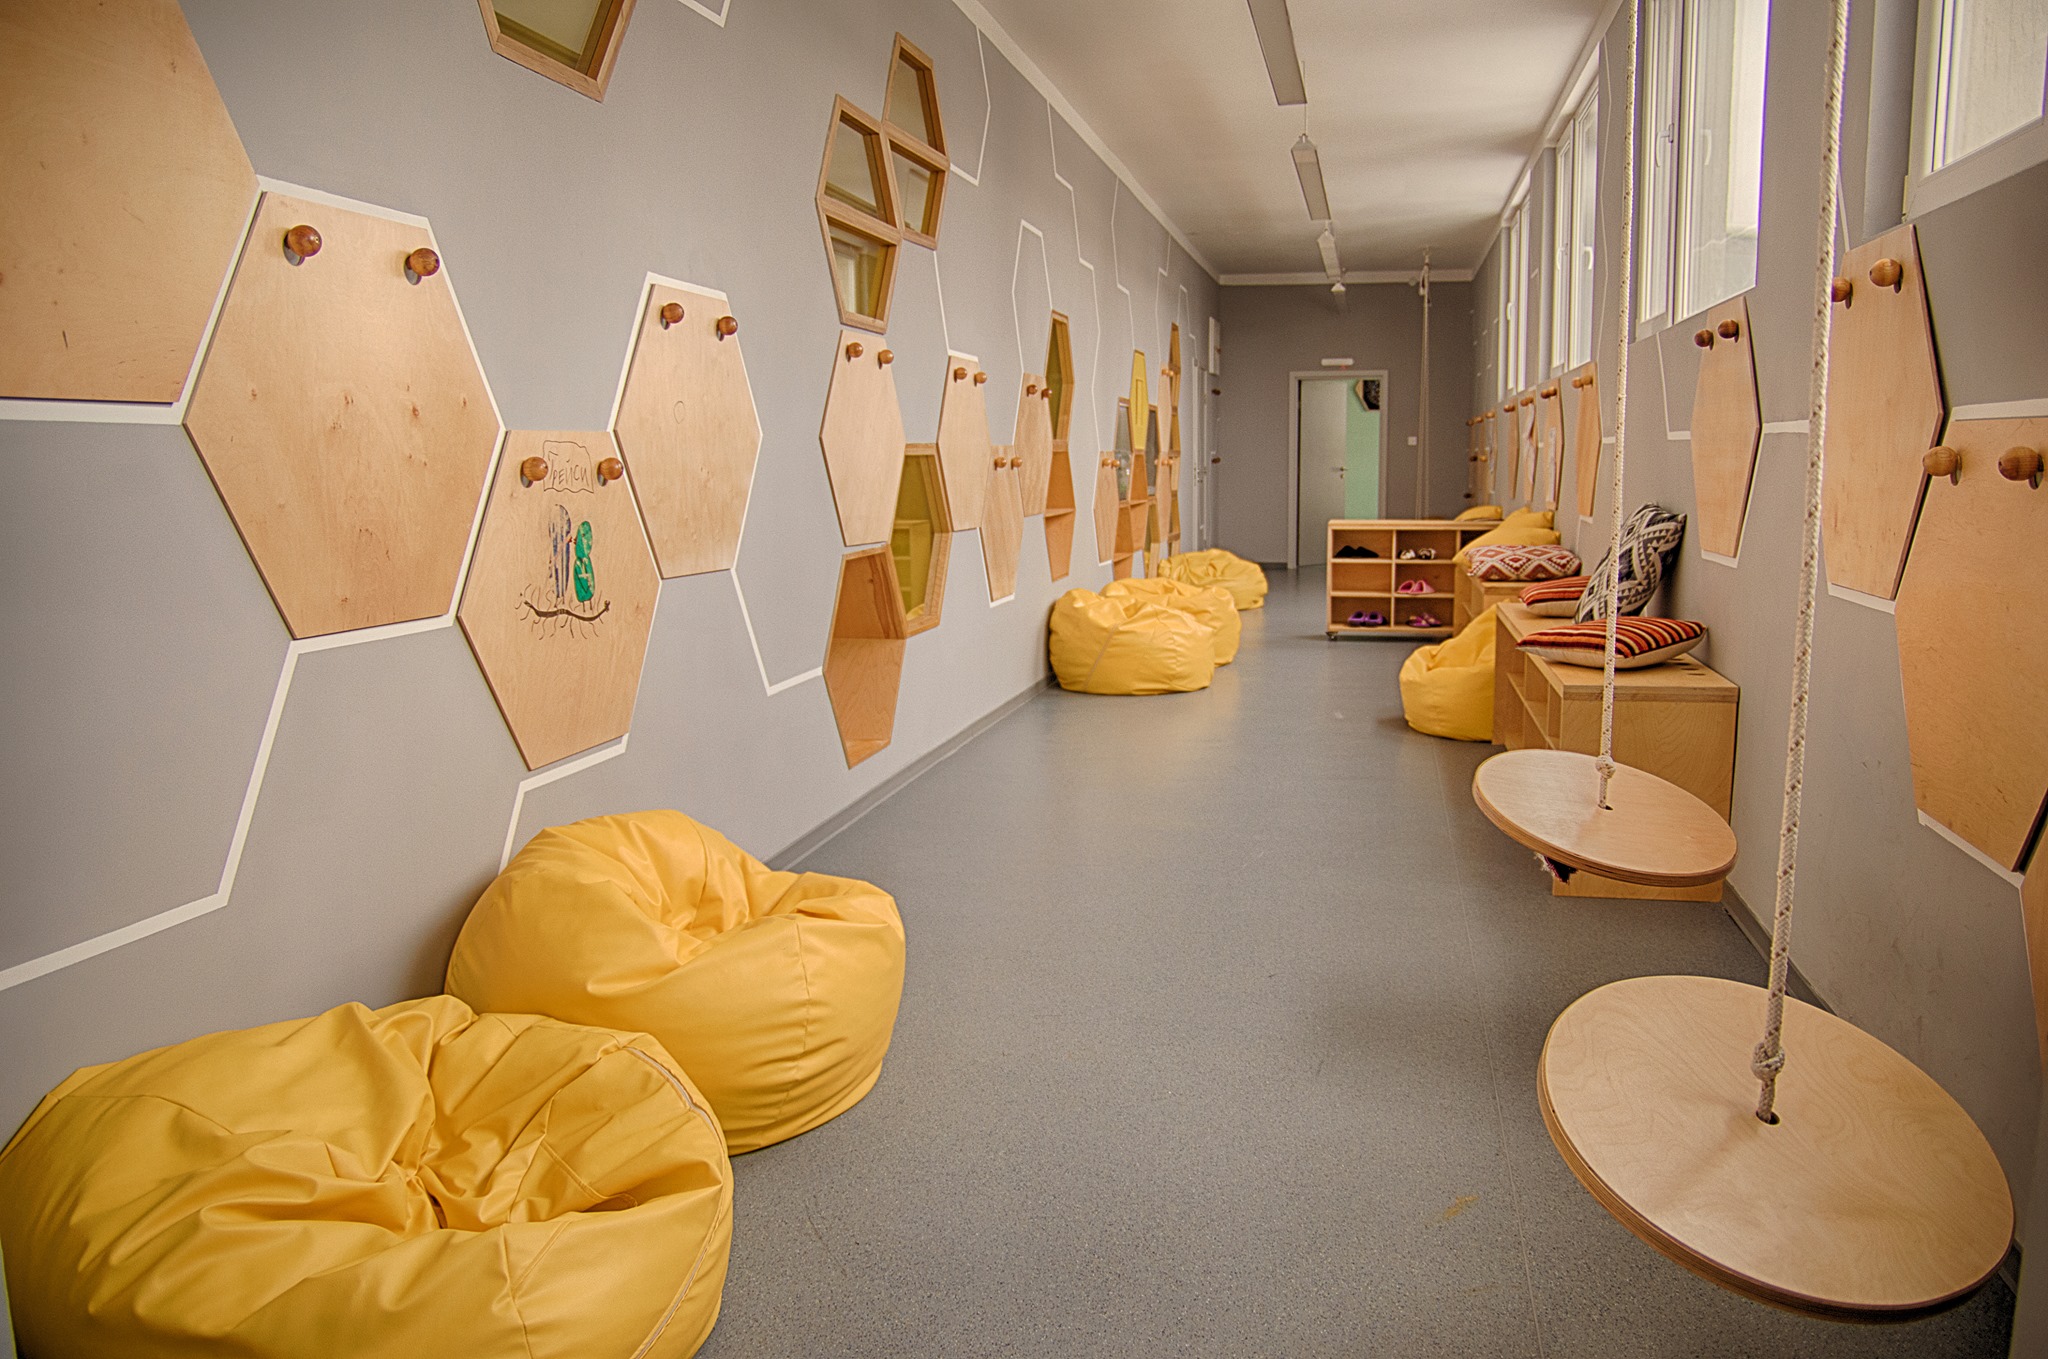 Primary School Hallway With ESCREO Writable Surfaces 0 